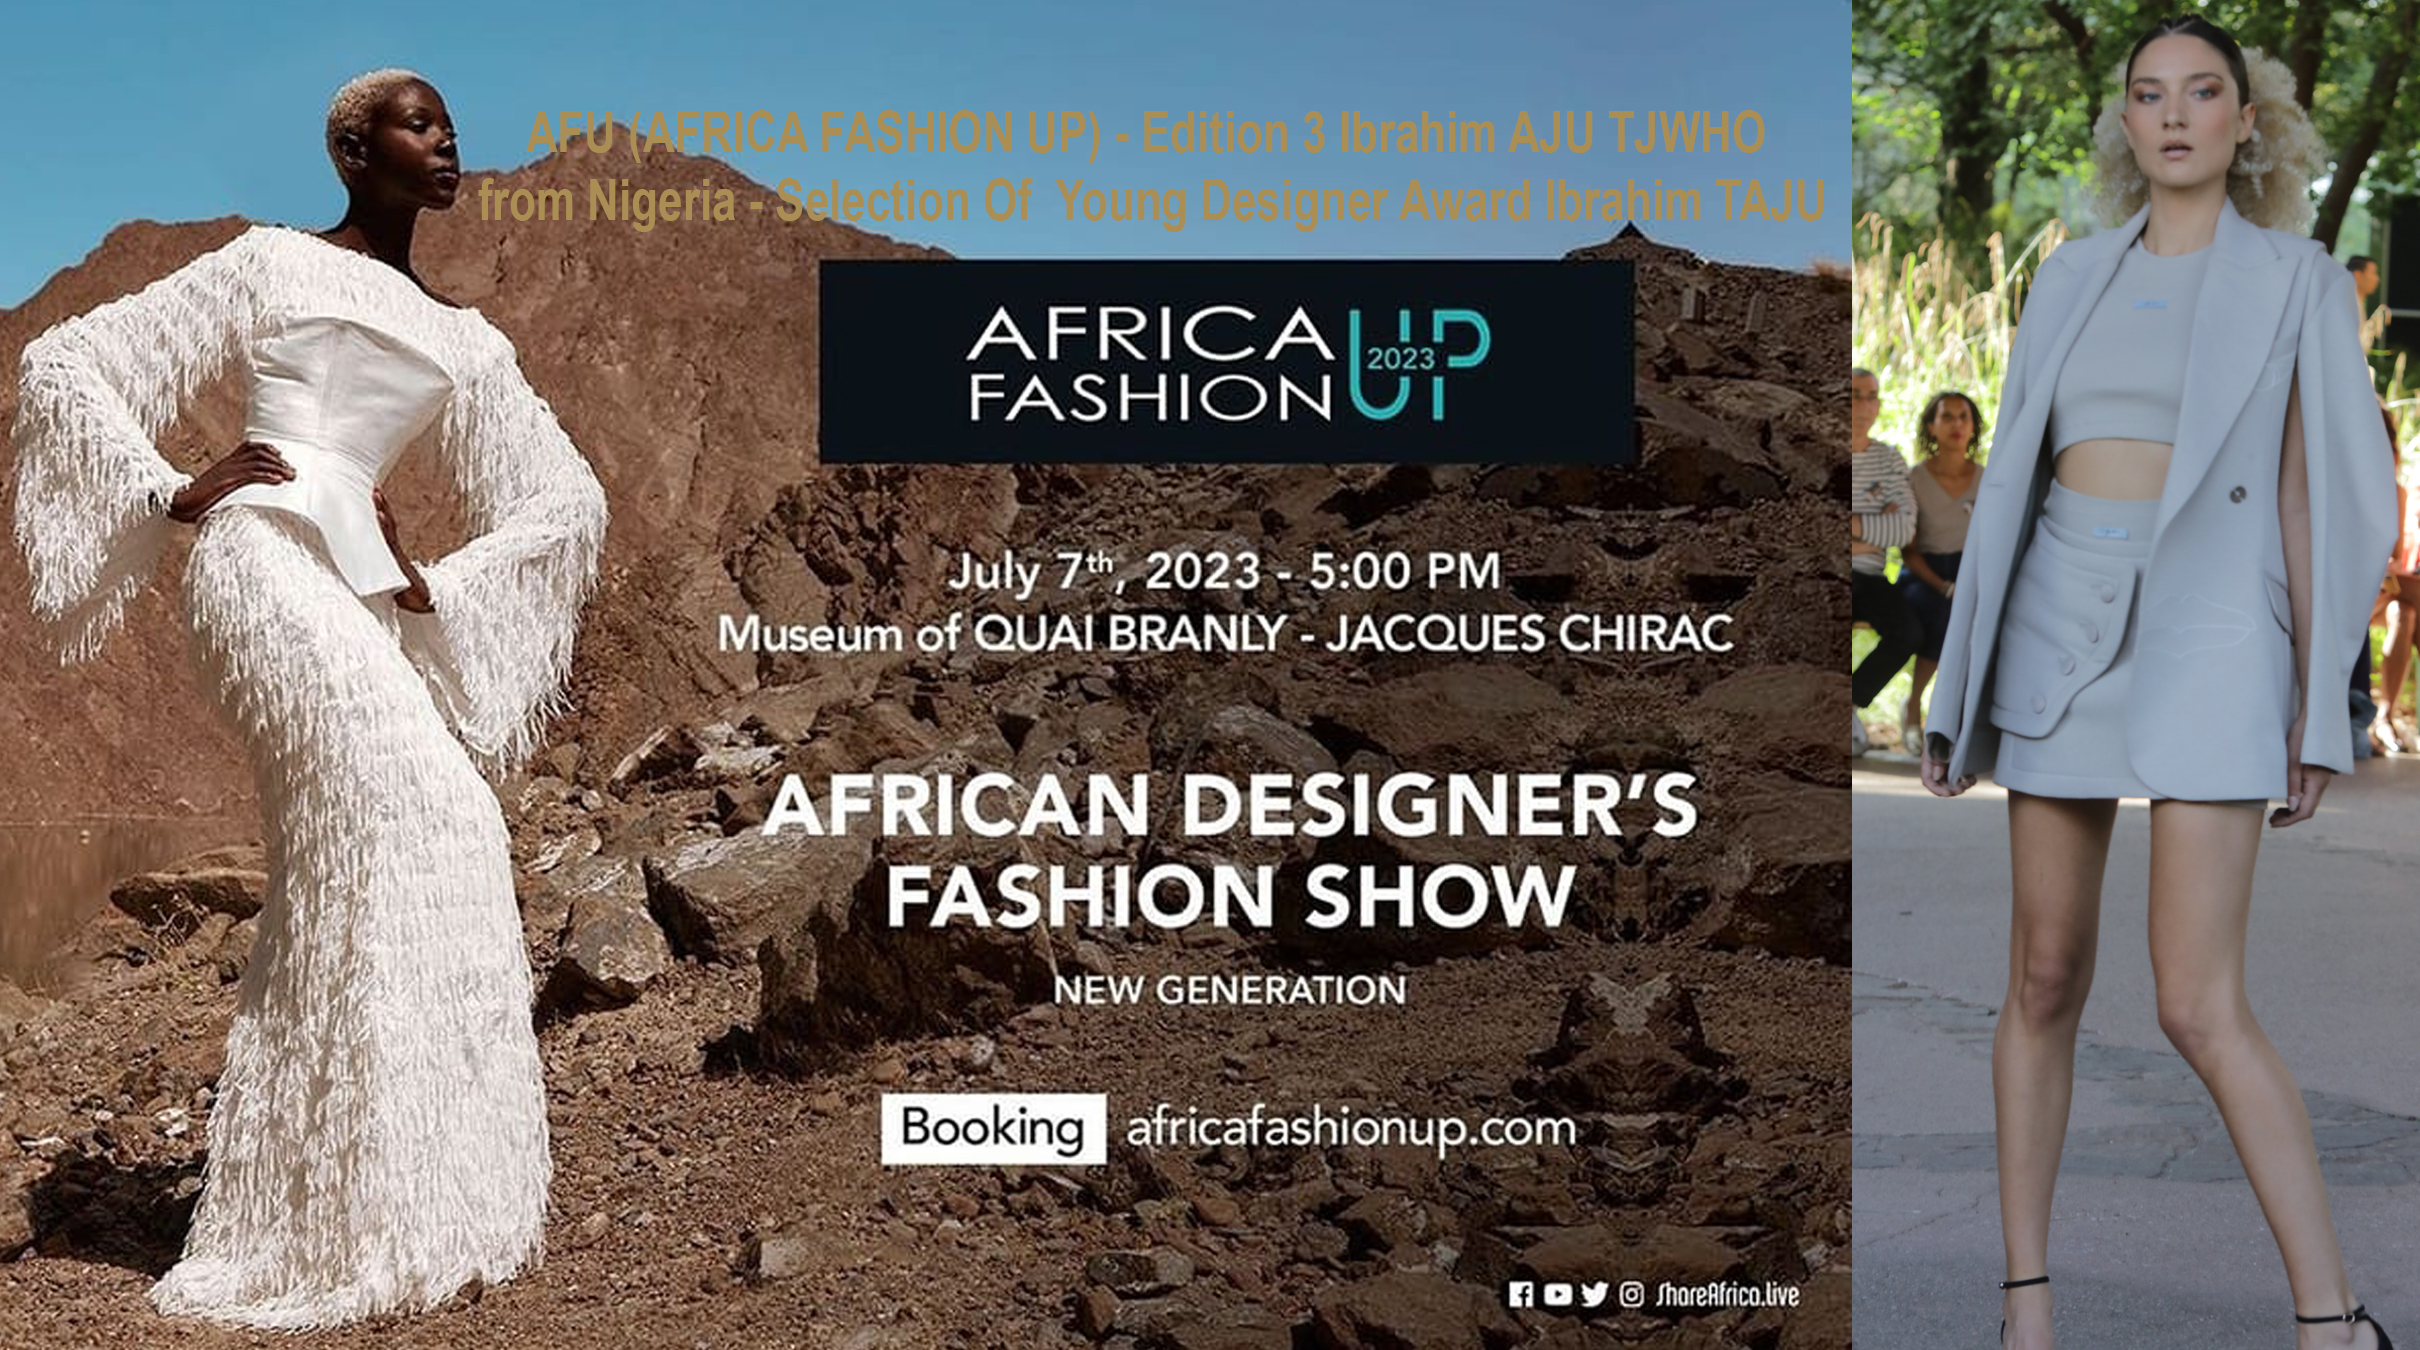 AFRICA-VOGUE-COVER-AFU-AFRICA-FASHION-UP-Edition-3-Ibrahim-AJU-TJWHO-from-Nigeria-Selection-Of -Young-Designer-Award-Ibrahim-TAJU-DN-AFRICA-Media-Partner